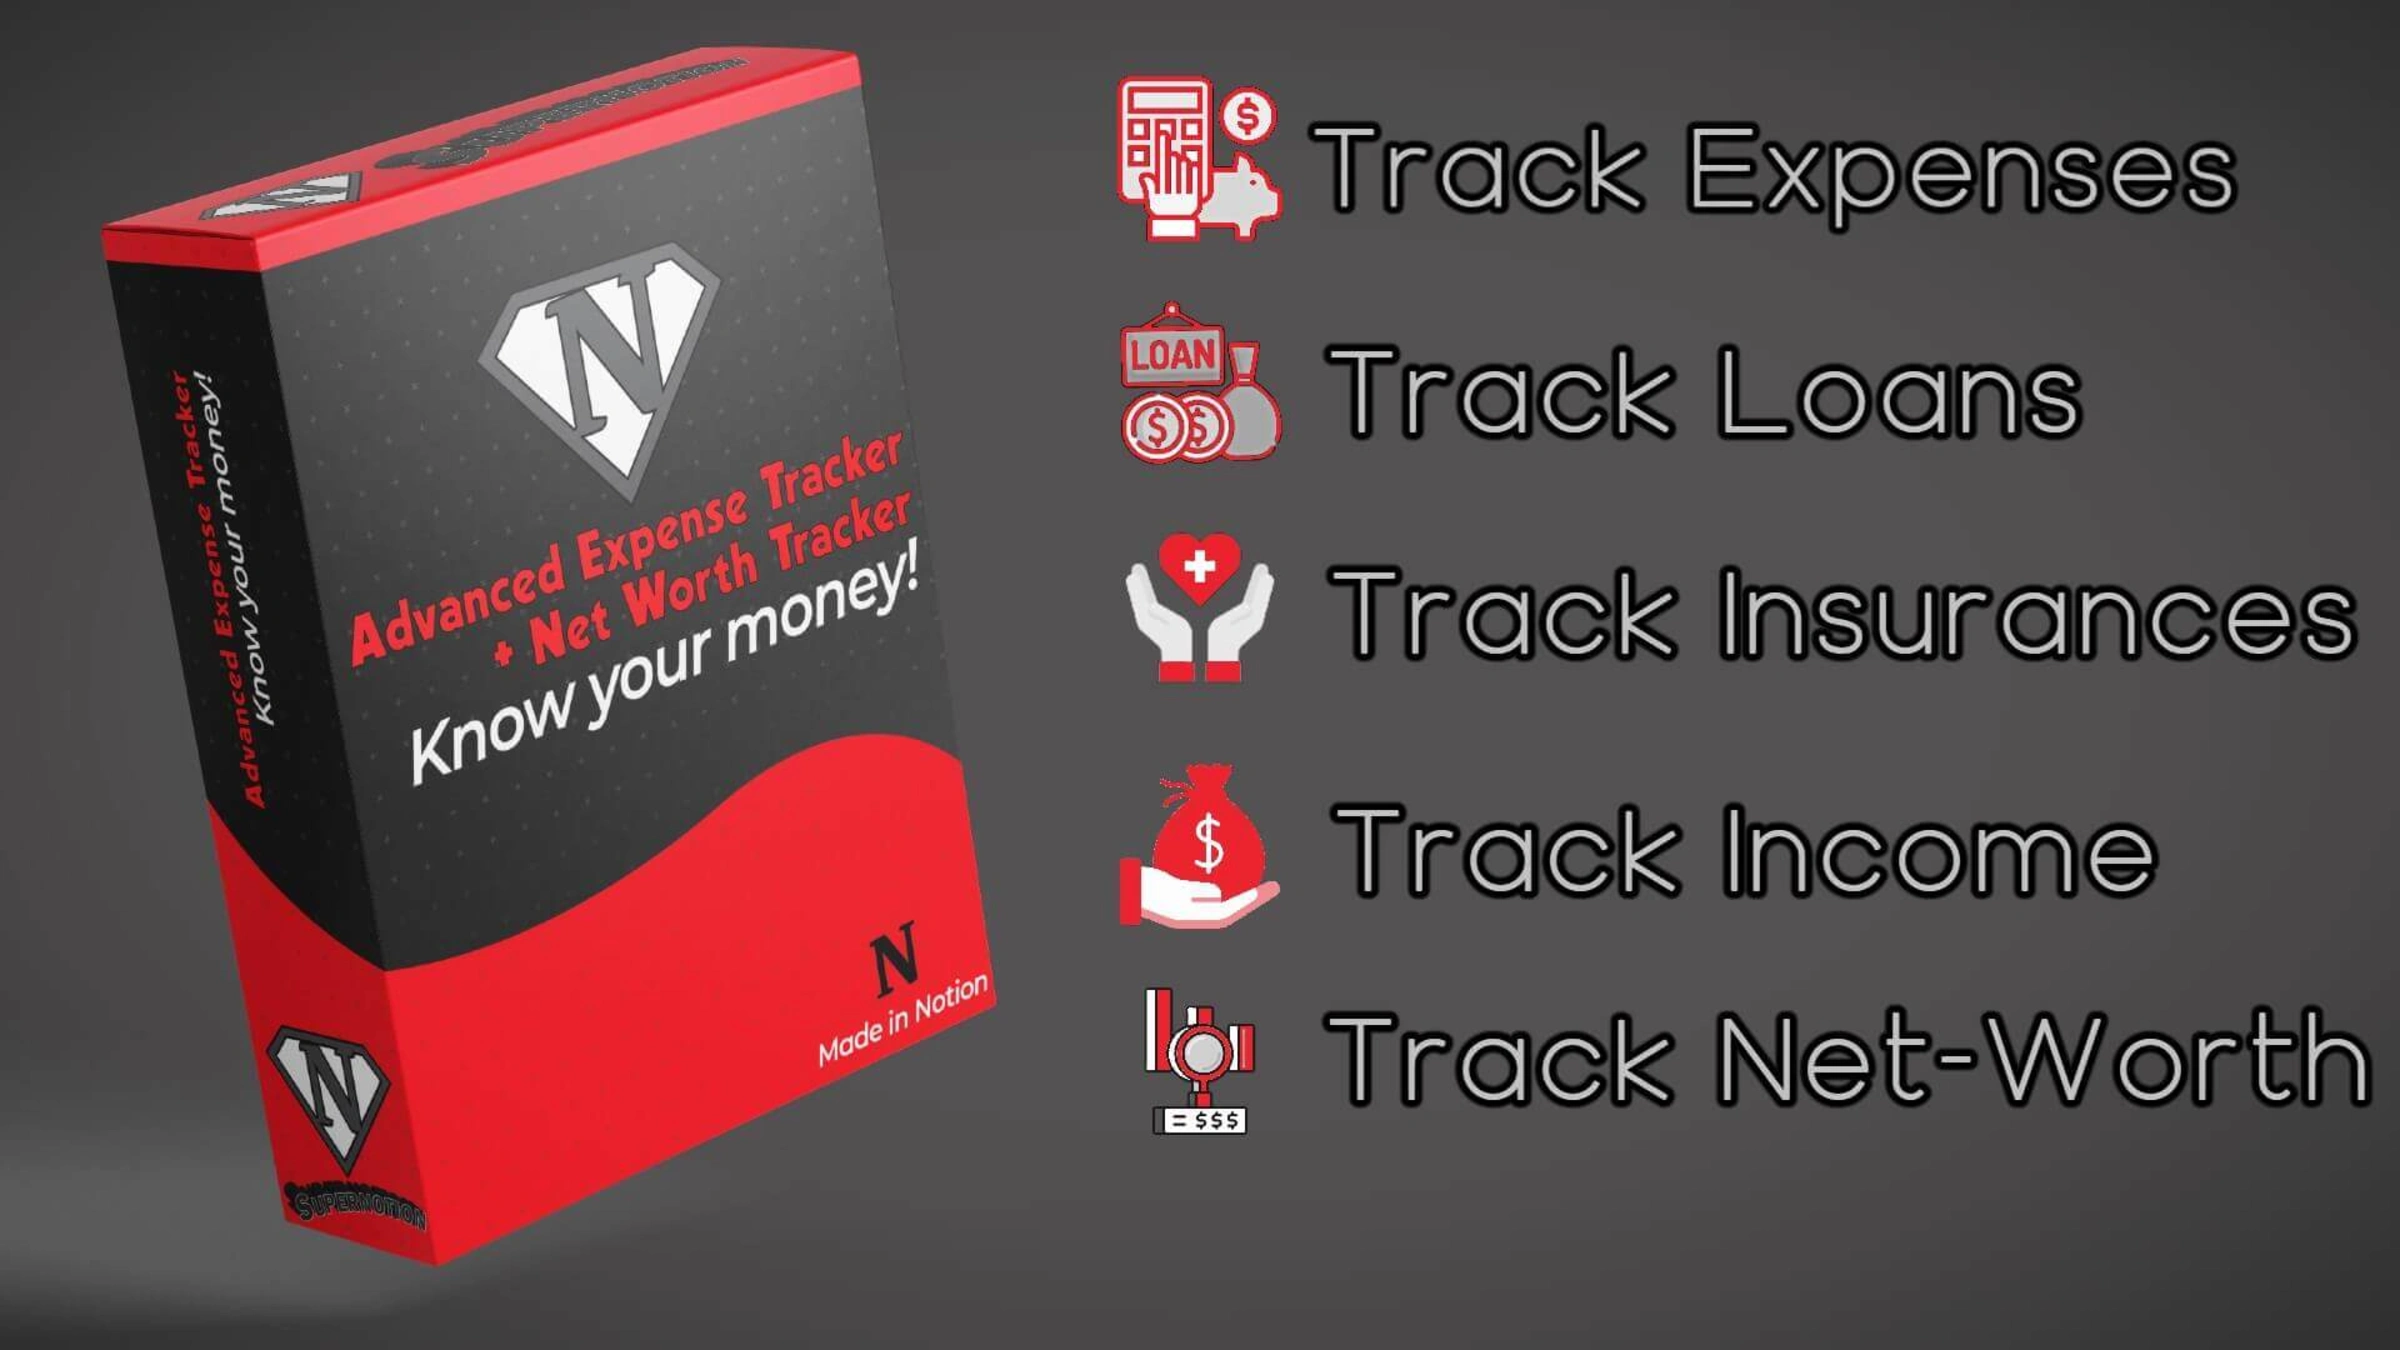 Advanced Expense Tracker + Net worth Calculator